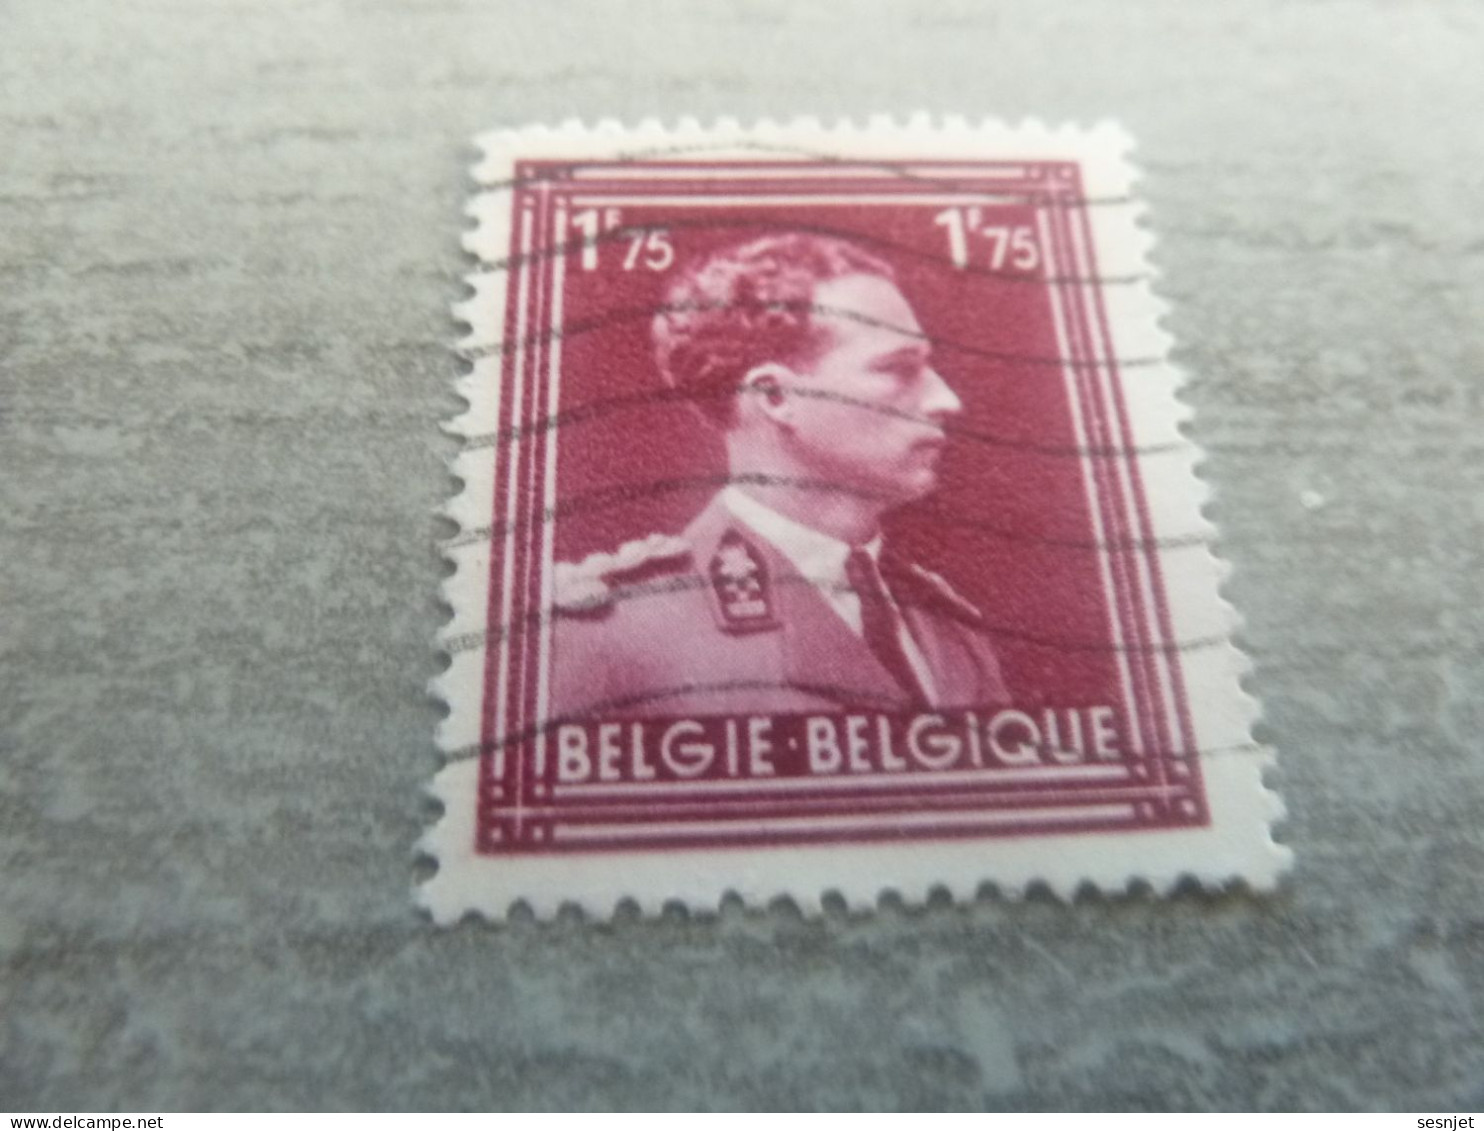 Belgique - Albert 1 - Val  1f.75 - Rose-Lilas - Oblitéré - Année 1945 - - Used Stamps